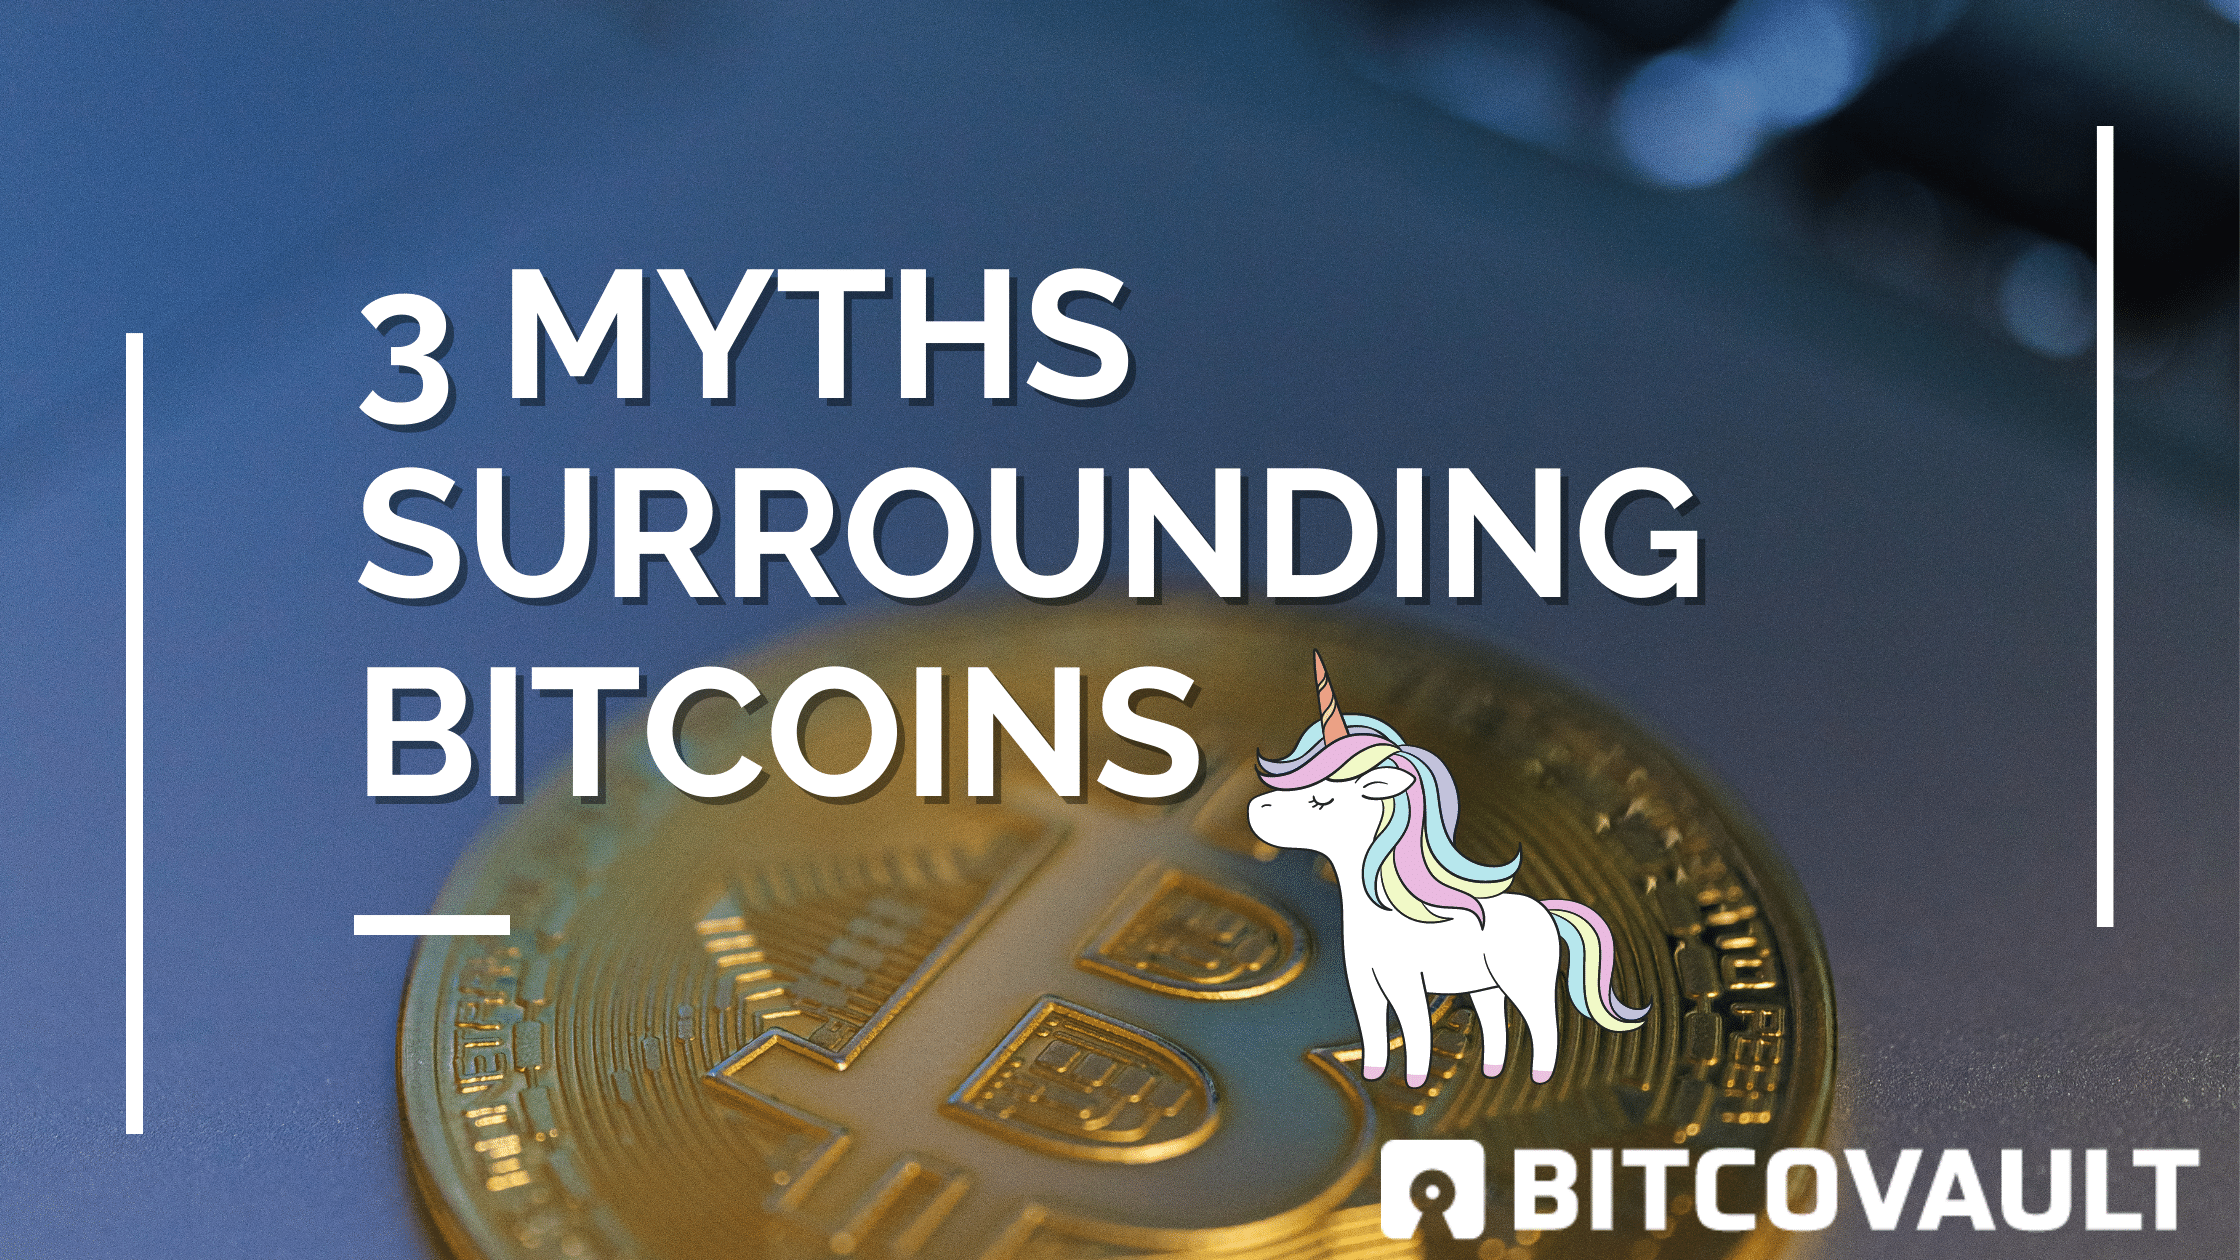 3 Myths Surrounding Bitcoins